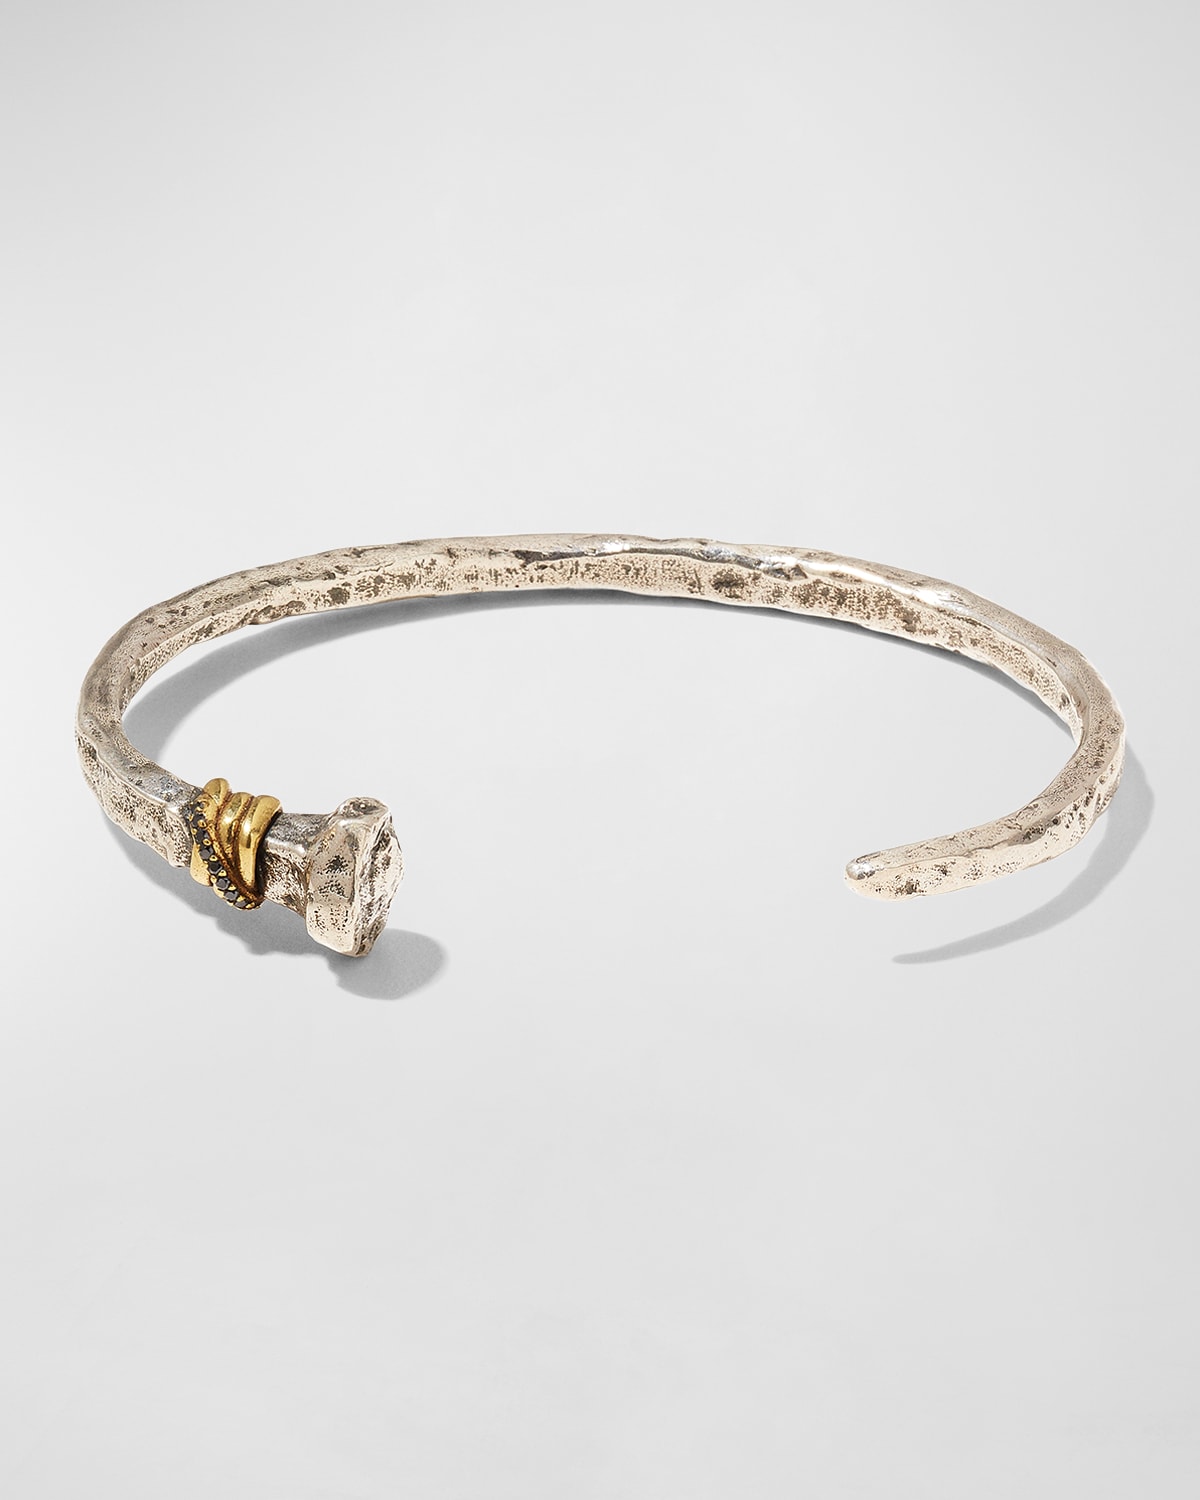 John Varvatos Men's Distressed Cuff Bracelet w/ Black Diamonds